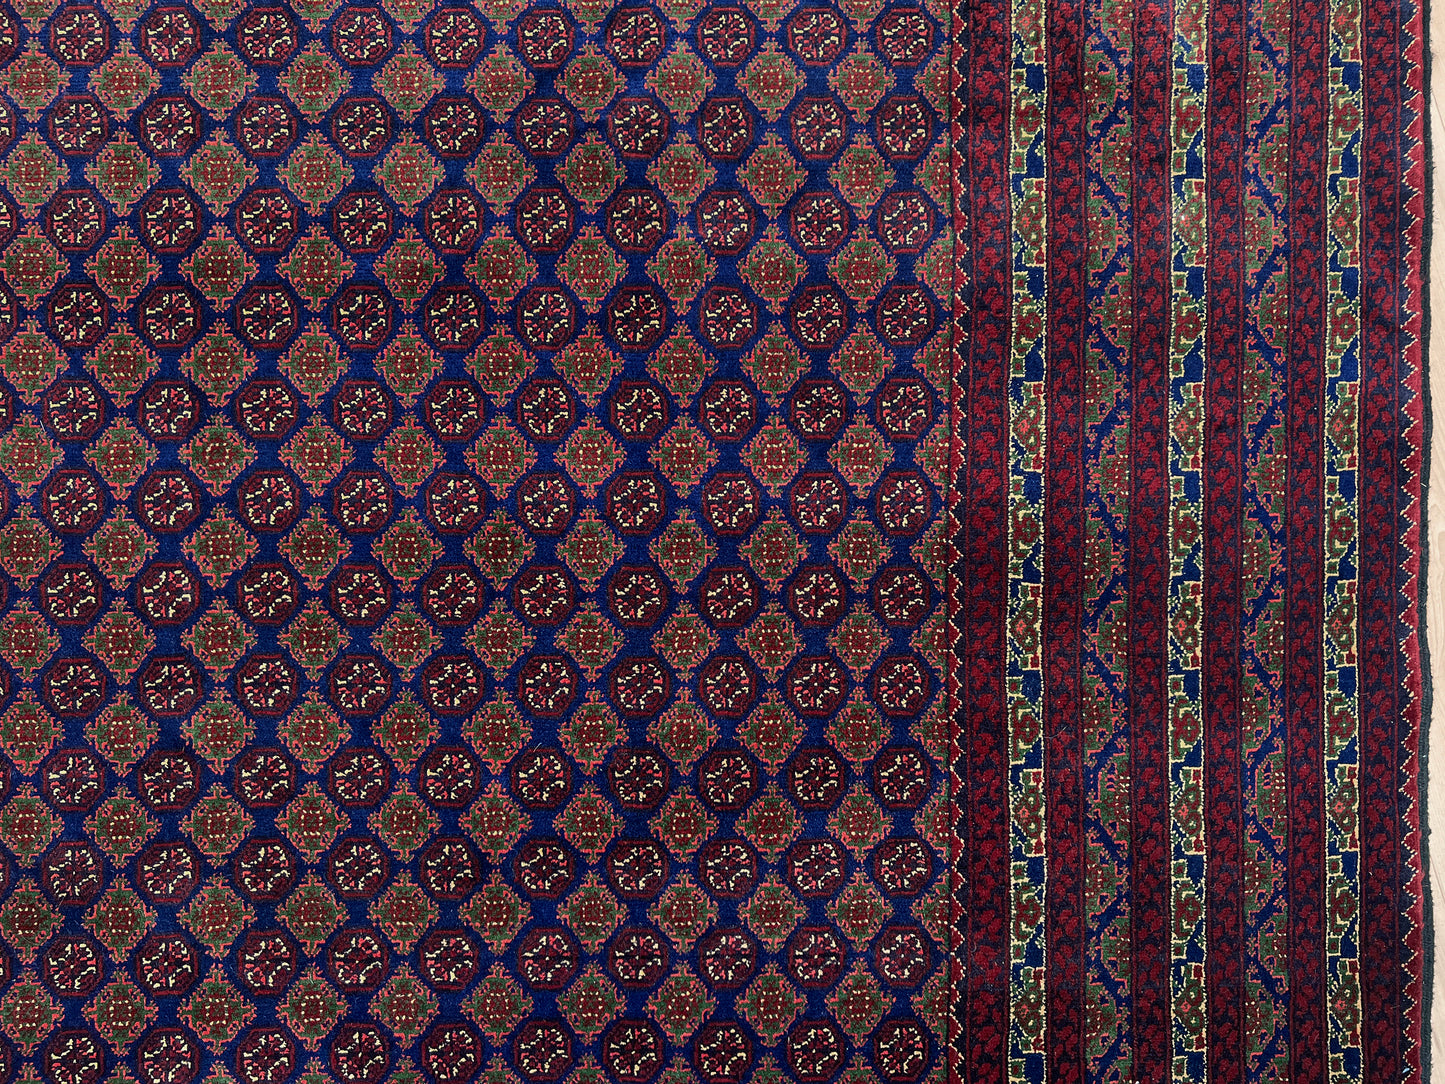 Burgundy navy Turkmen fine handmade area rug shop palo alto. Oriental rug shop san francisco bay area. Luxury rug from afghanistan